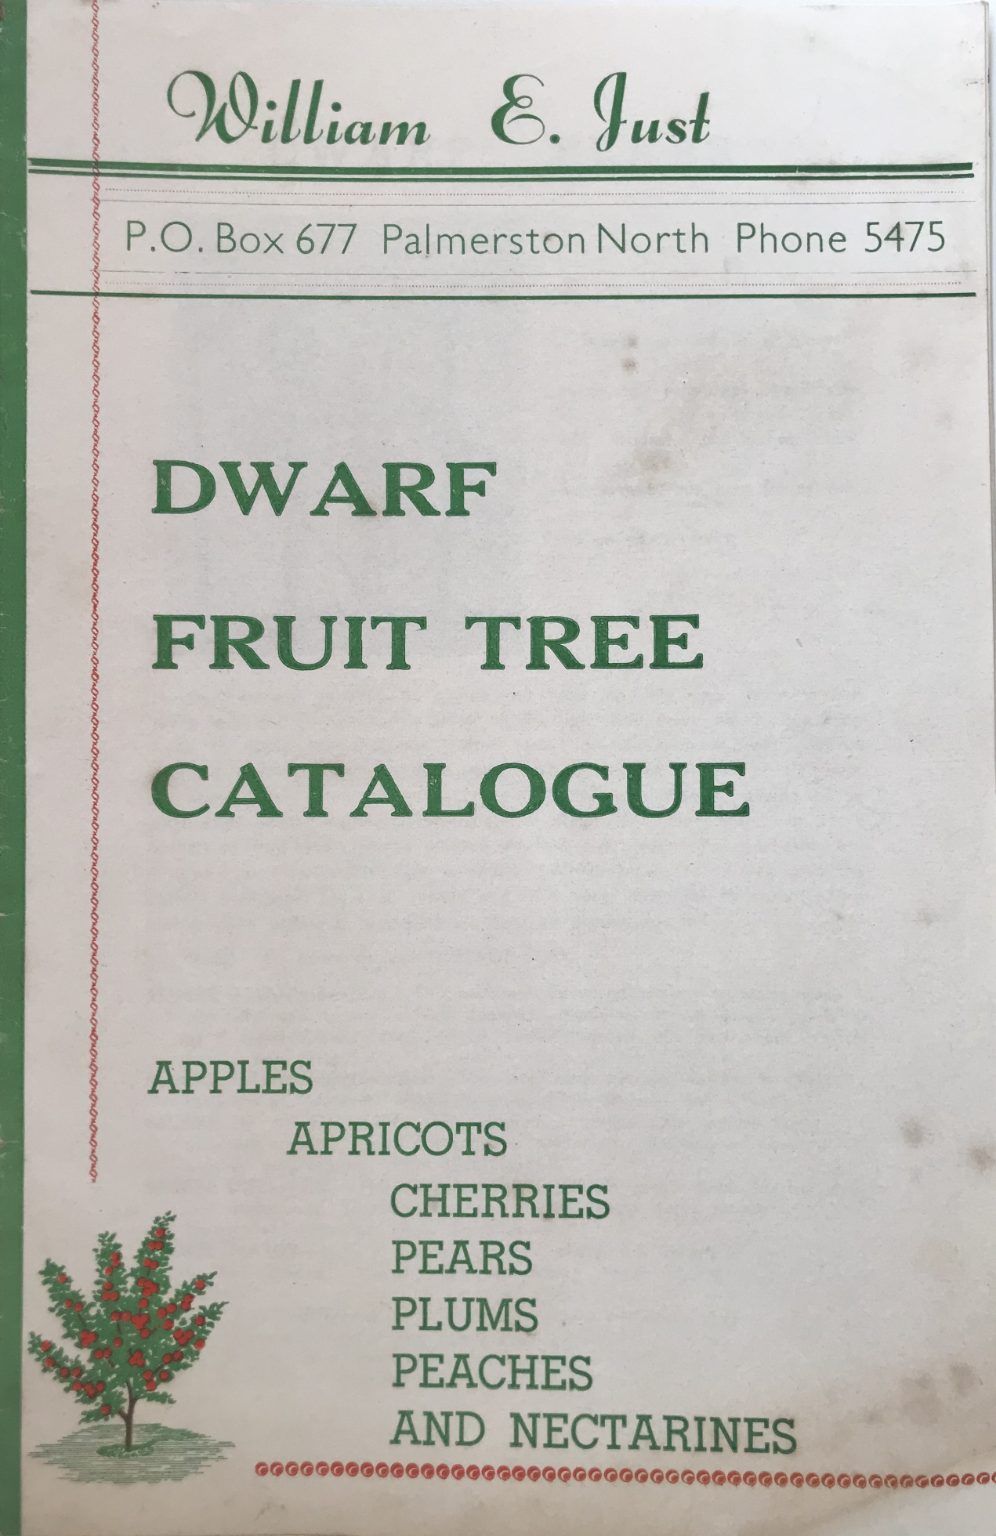 DWARF FRUIT TREE CATALOGUE